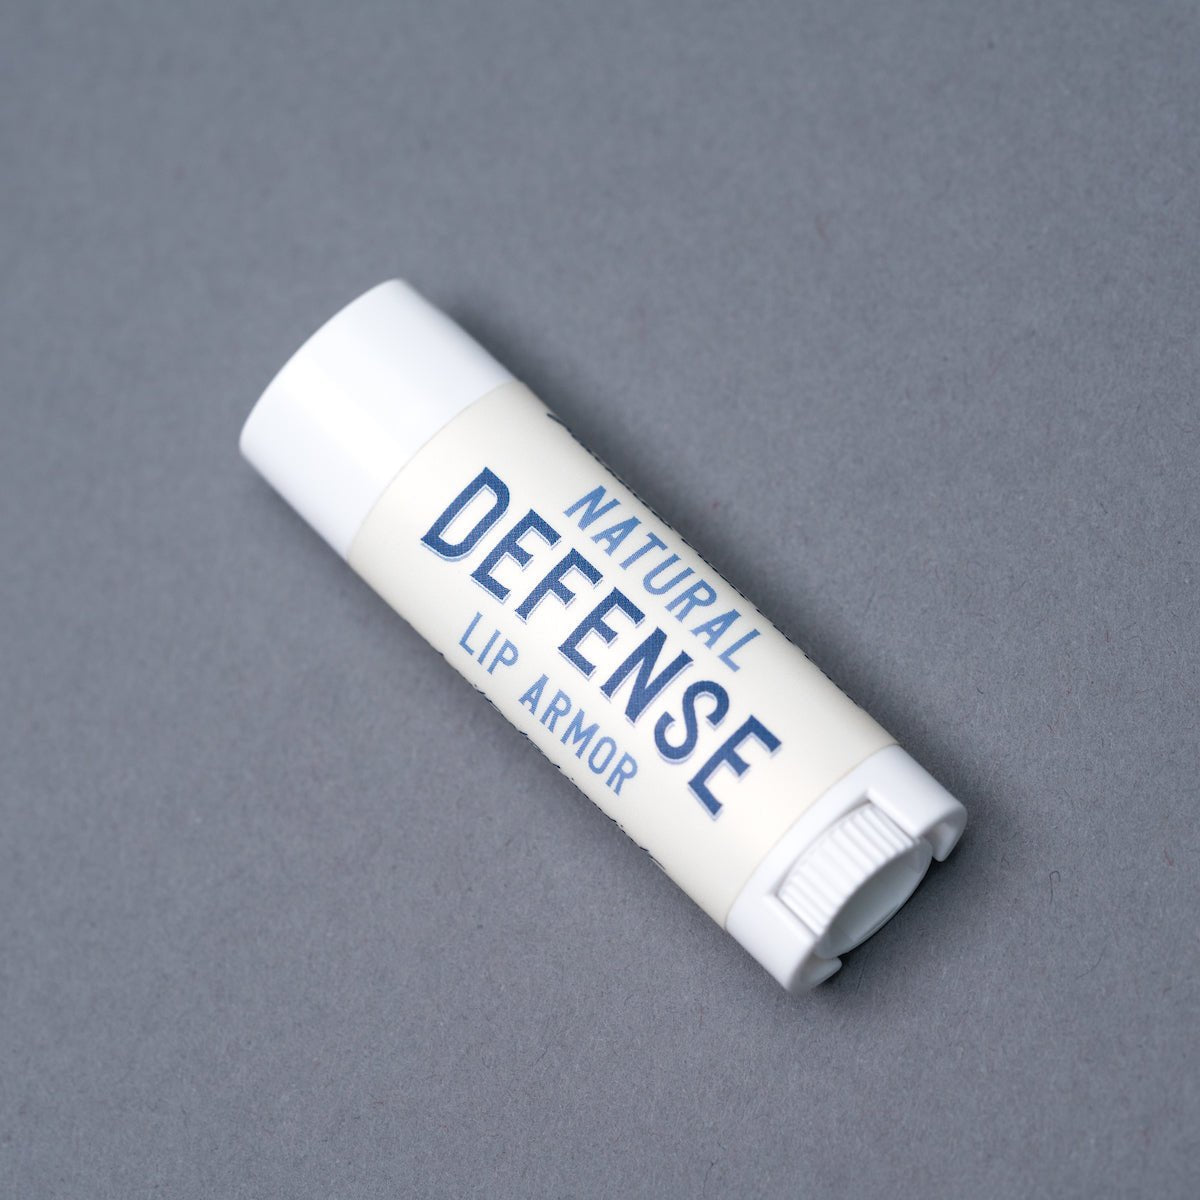 Natural Defense Lip Armor - Kentucky Soaps & Such